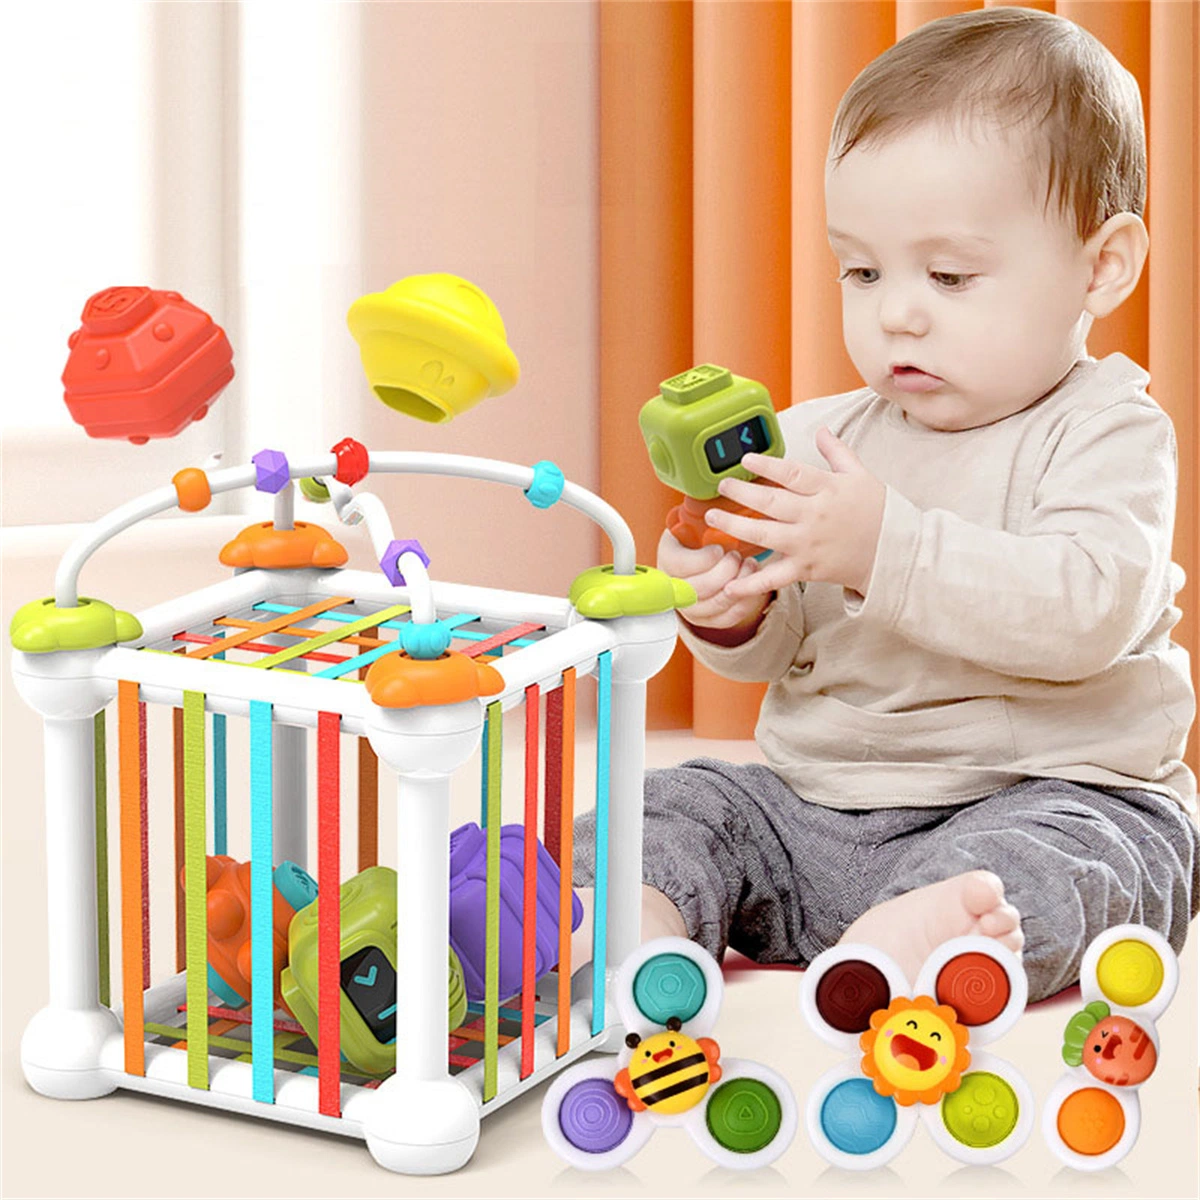 Sensory Toys Shape Sorter Baby Blocks Colorful Textured Balls Sorting Games Montessori Learning Activity for Fine Motor Skills Early Development